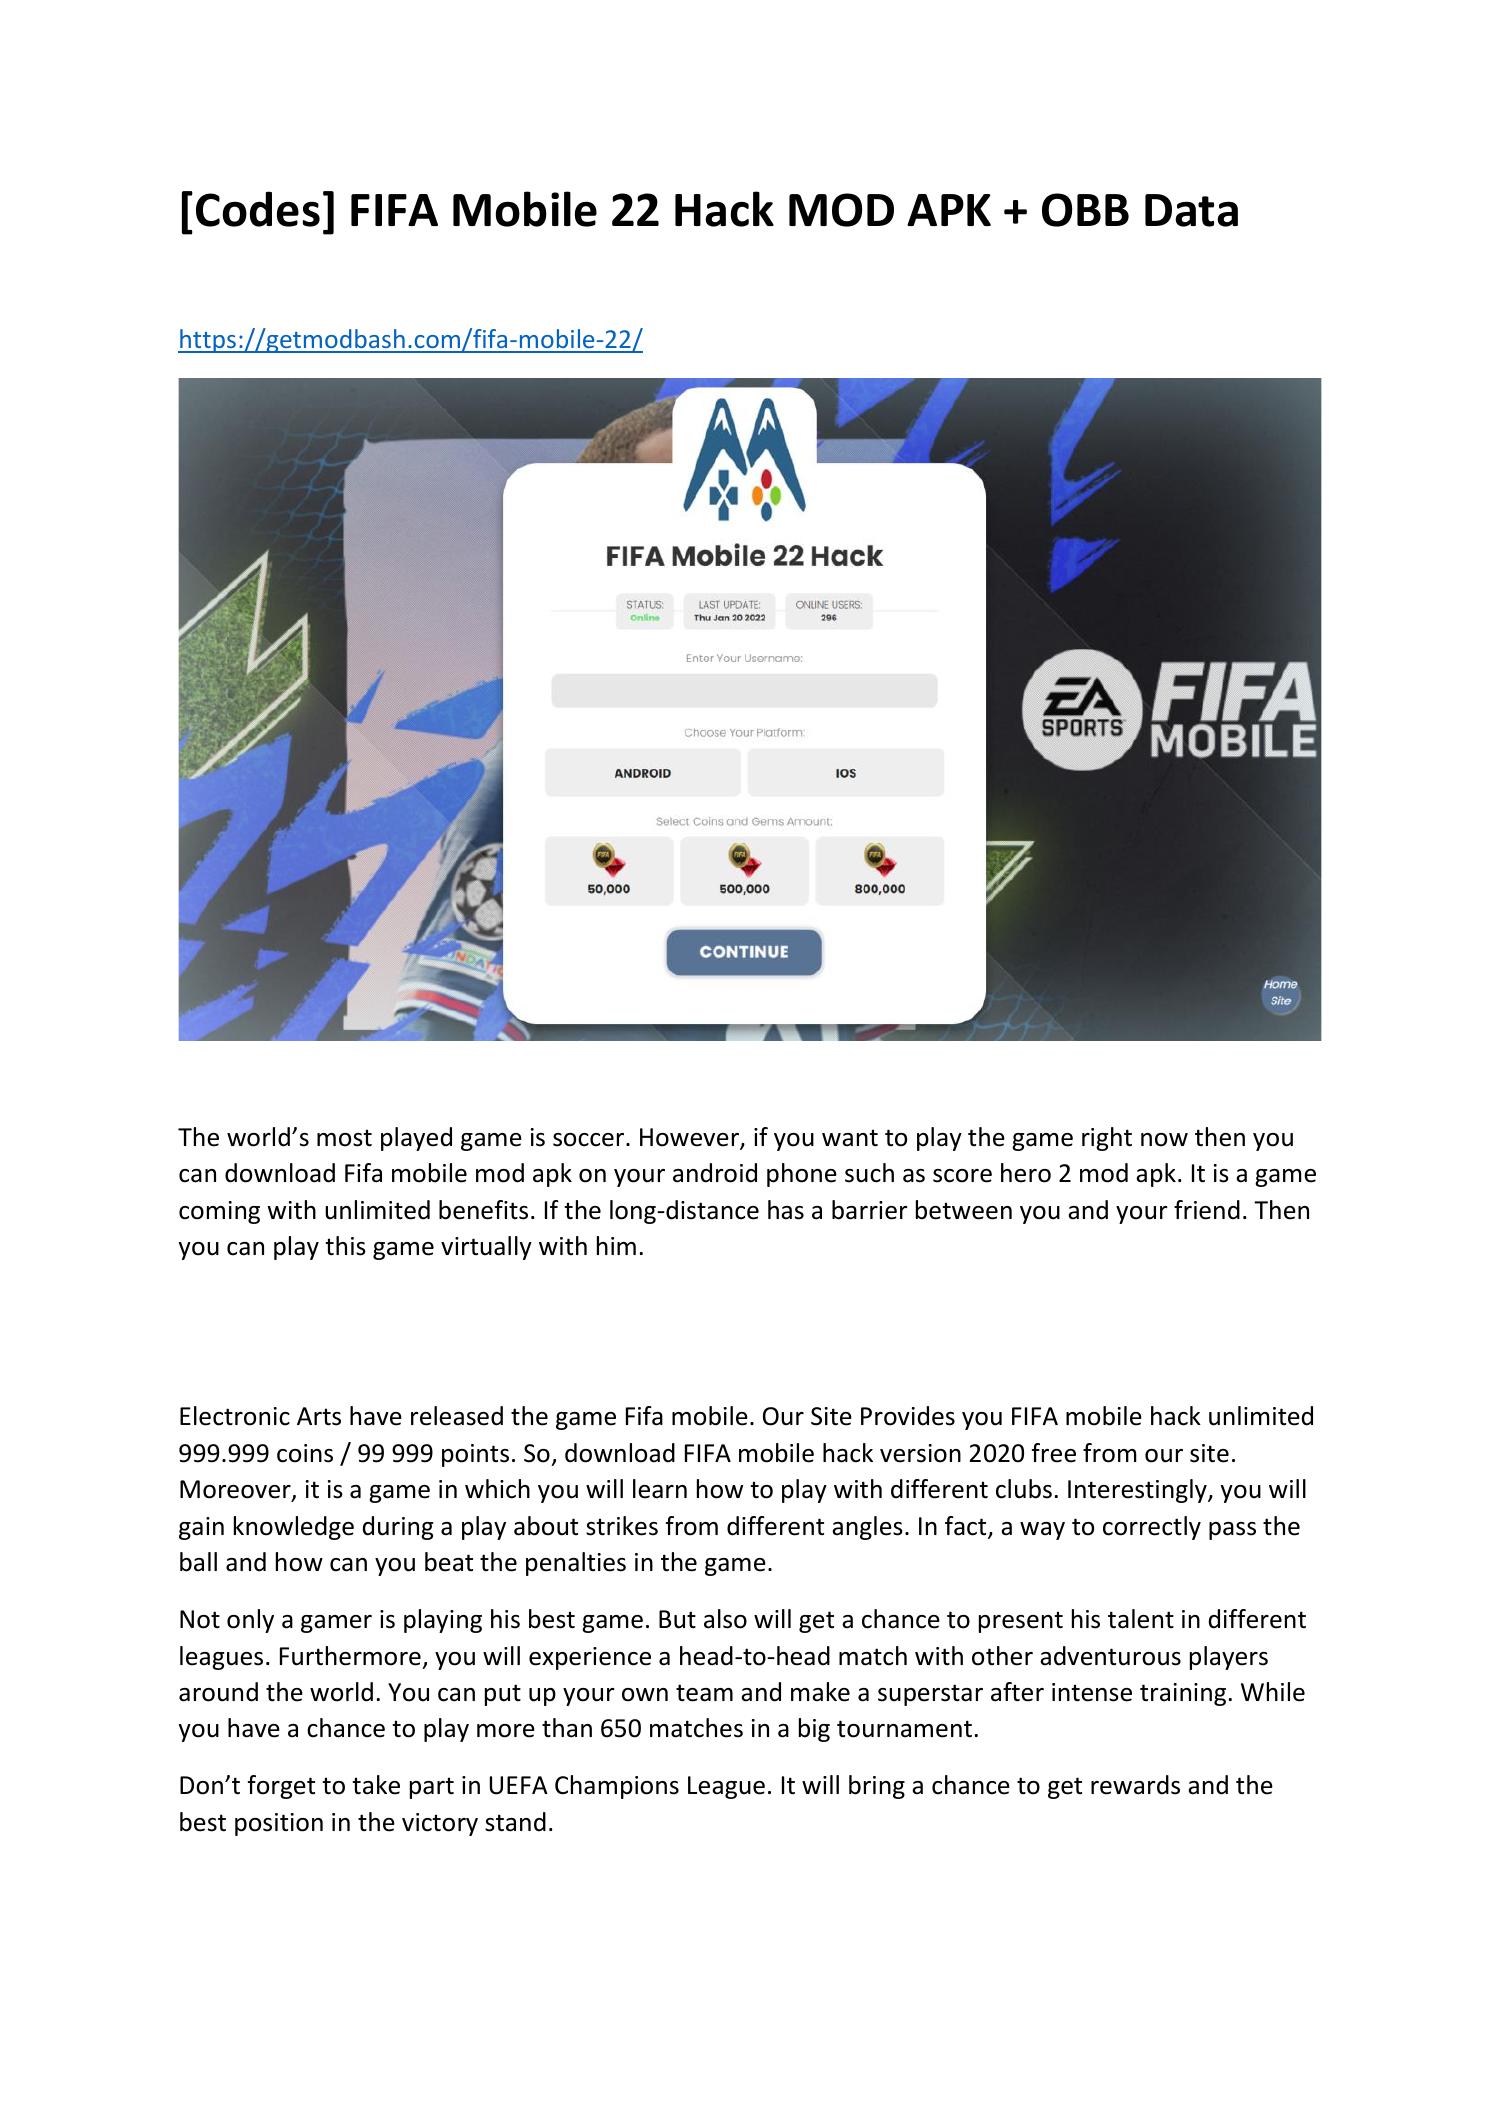 FIFA 22 Mobile Hack Mod Apk Android iOS Codes.pdf